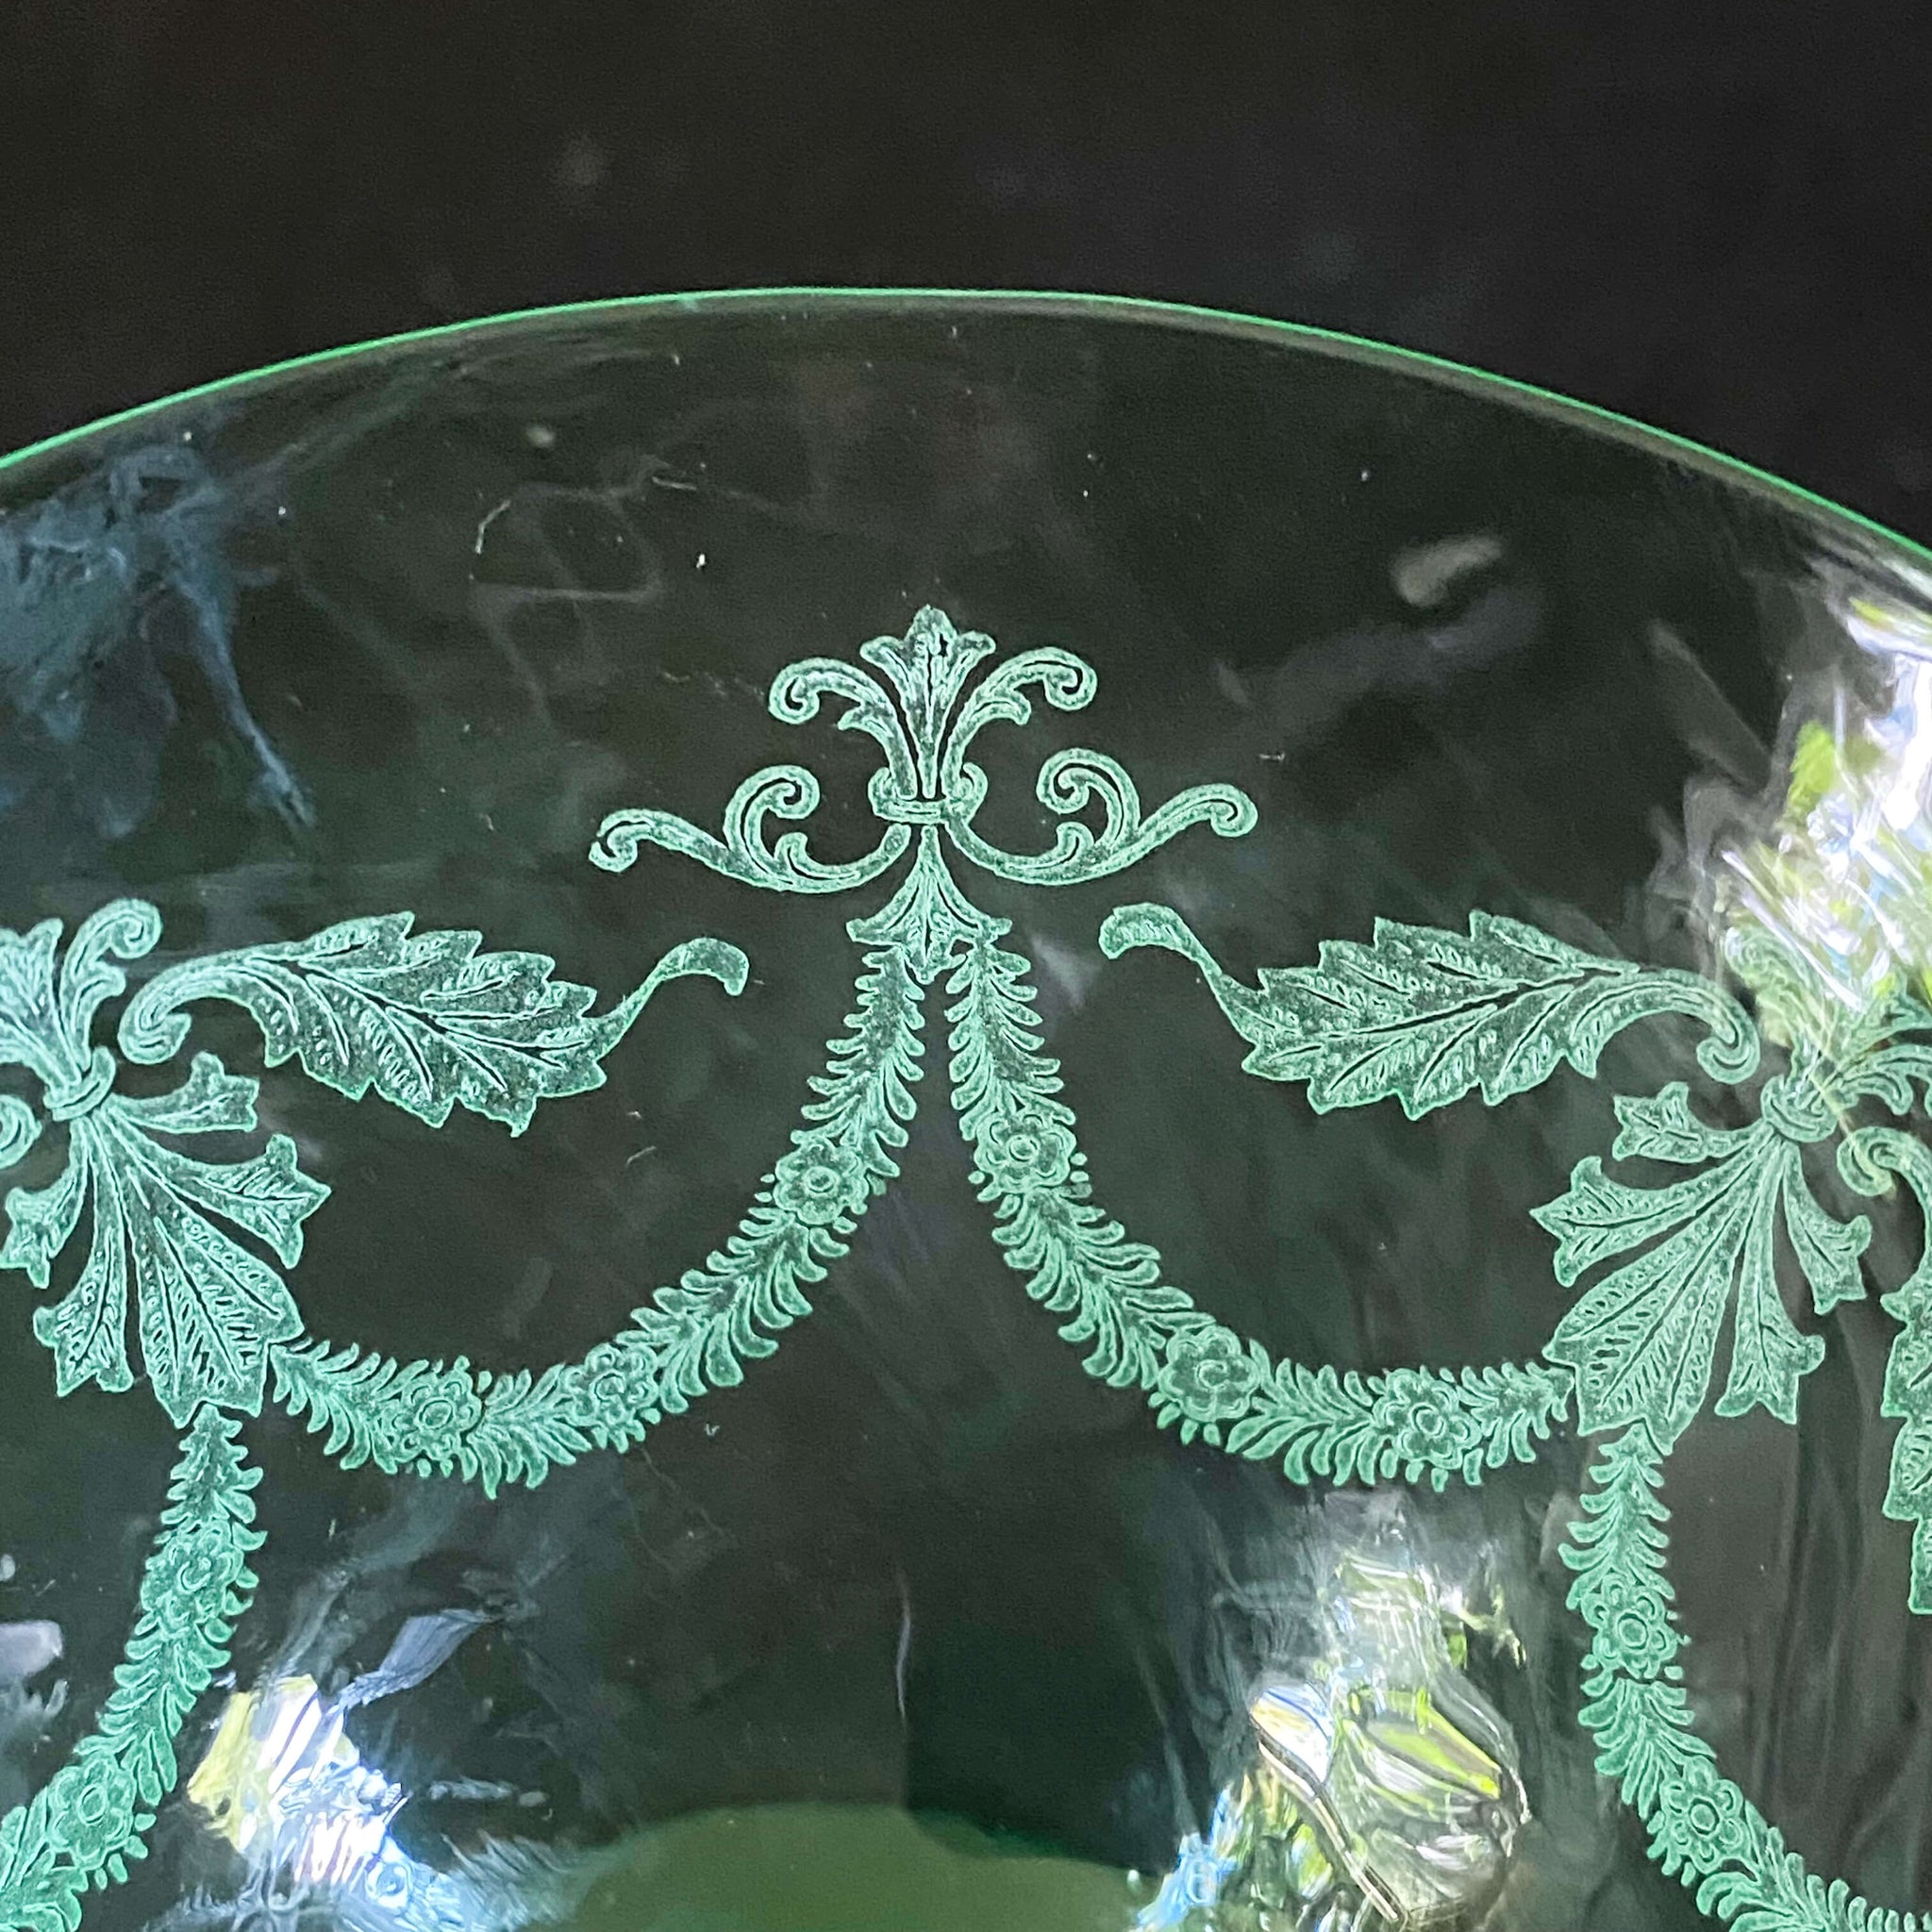 Vintage Uranium Glass Stemware - Mismatched Set of 6 - Green Glowing Glass